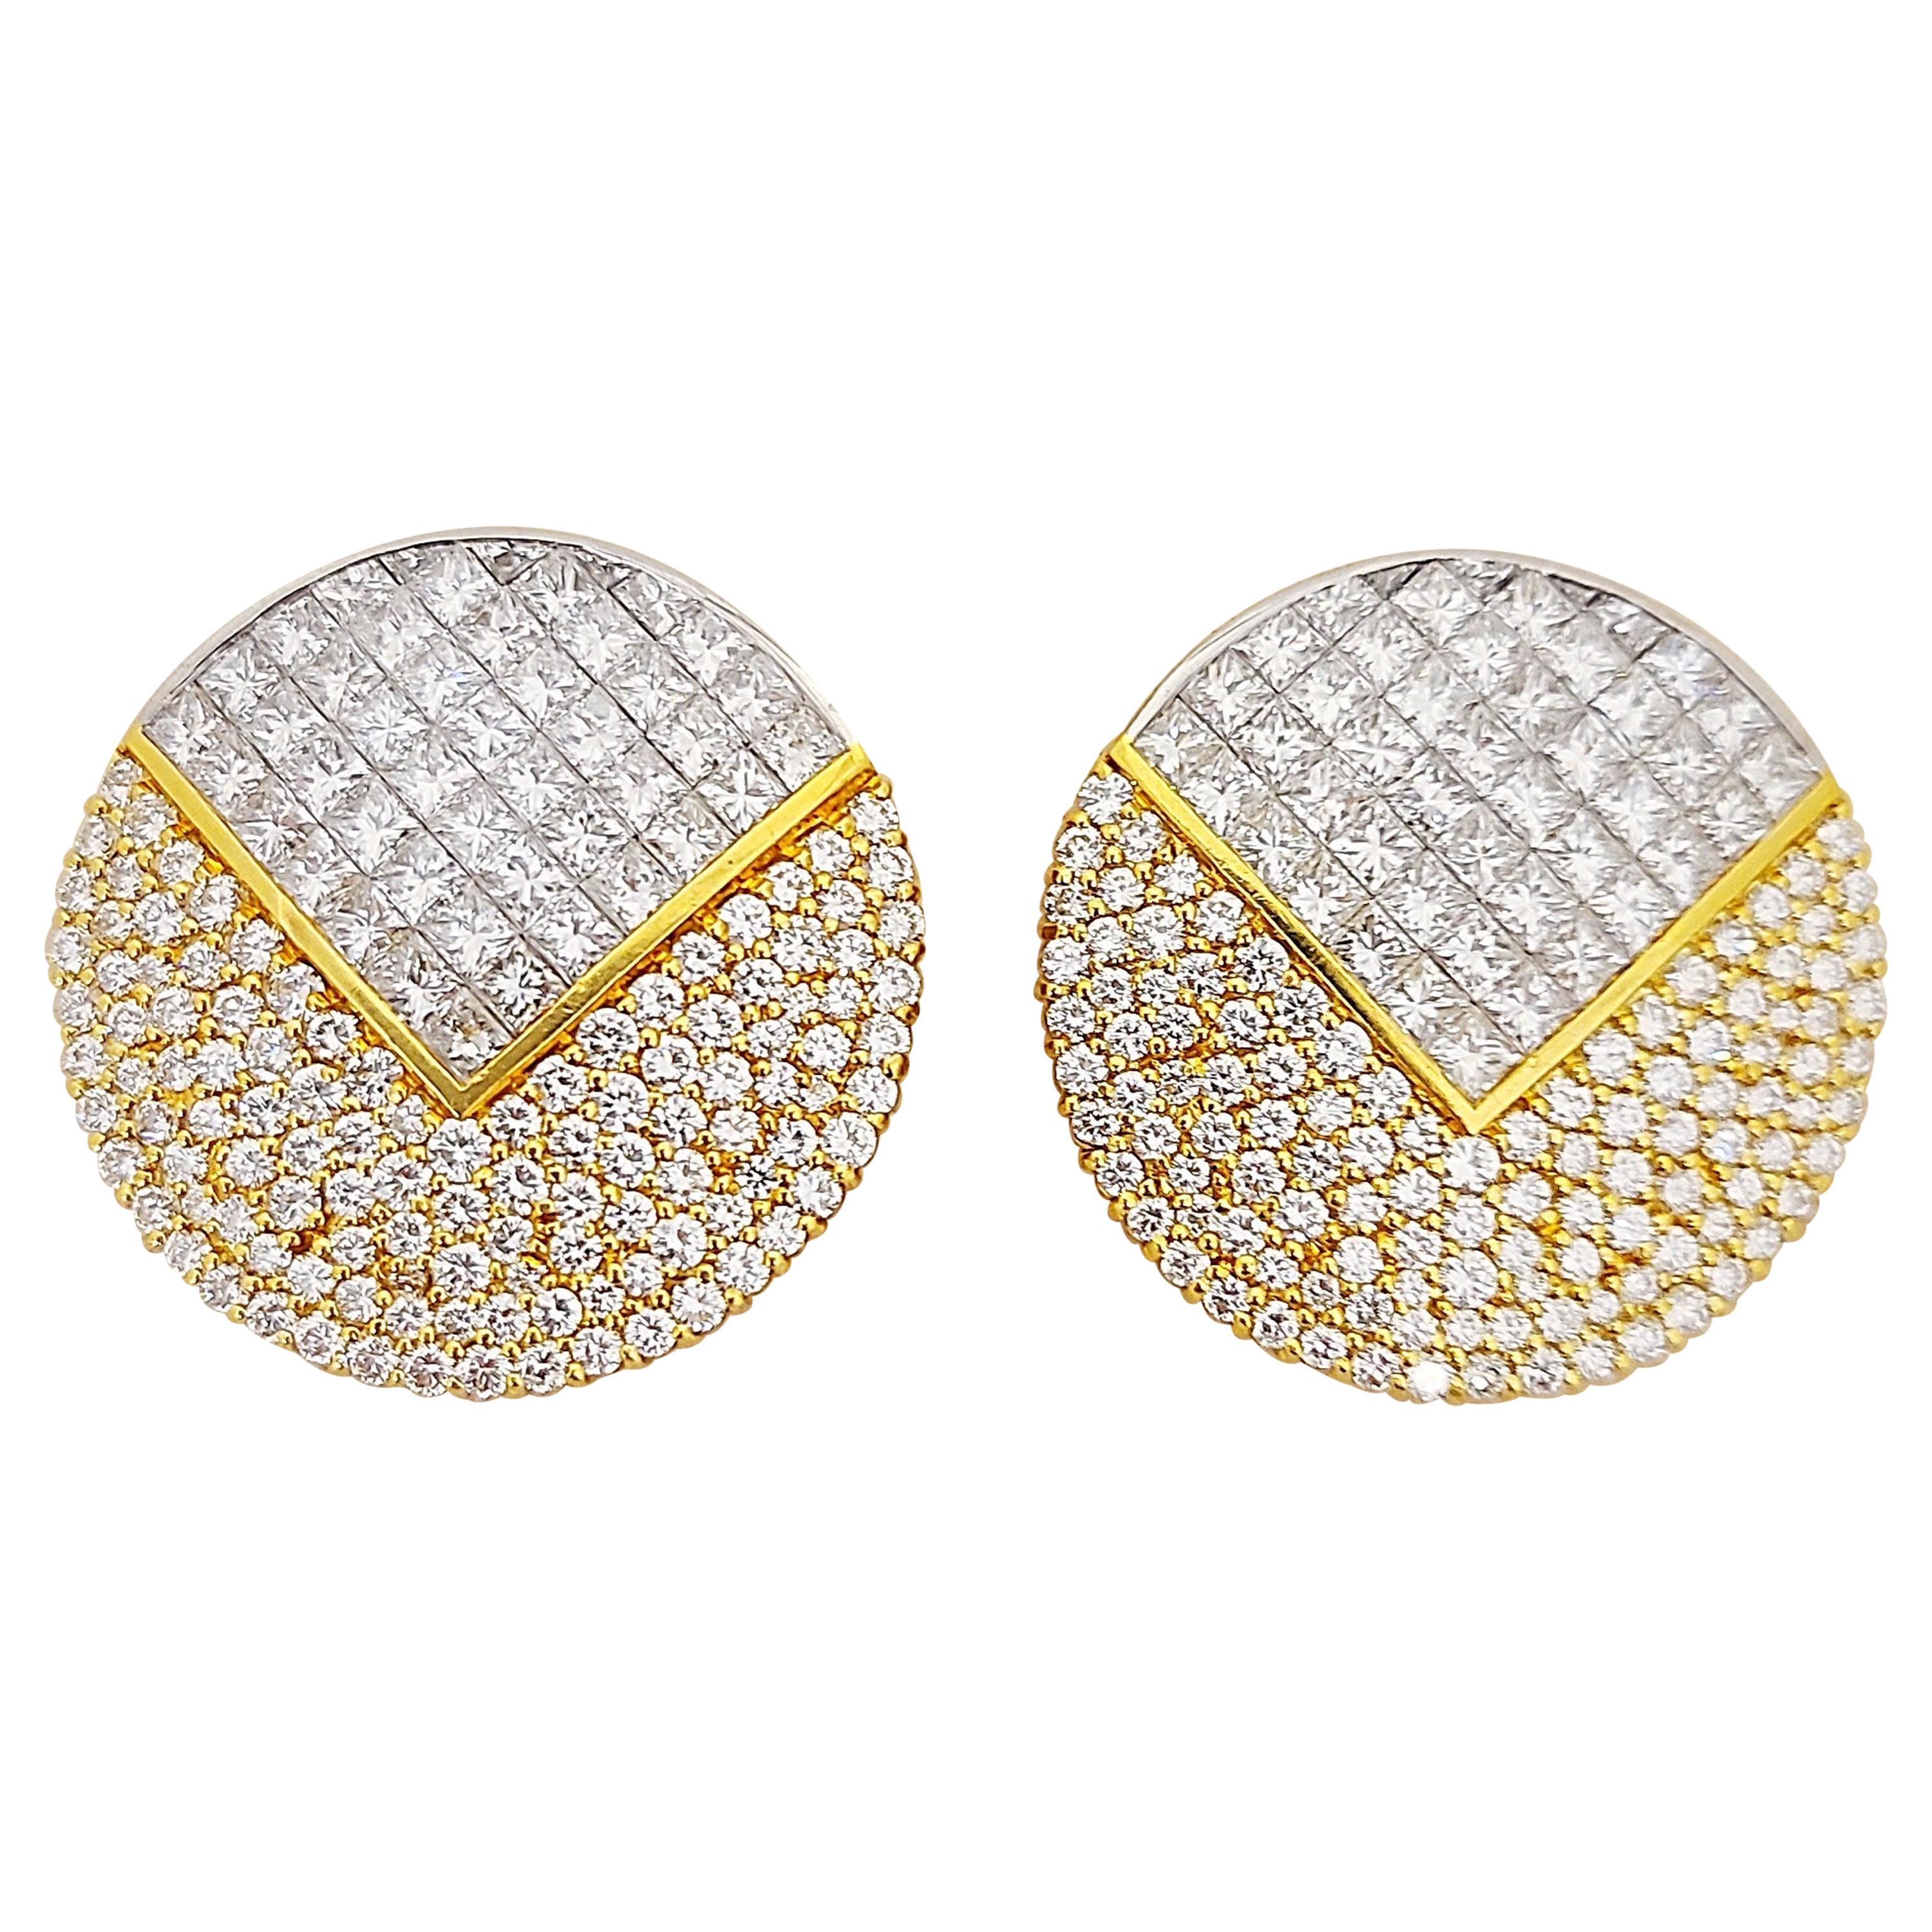 Nova 18 Karat Yellow Gold and Platinum 14.57 Carat Diamond Earrings For Sale